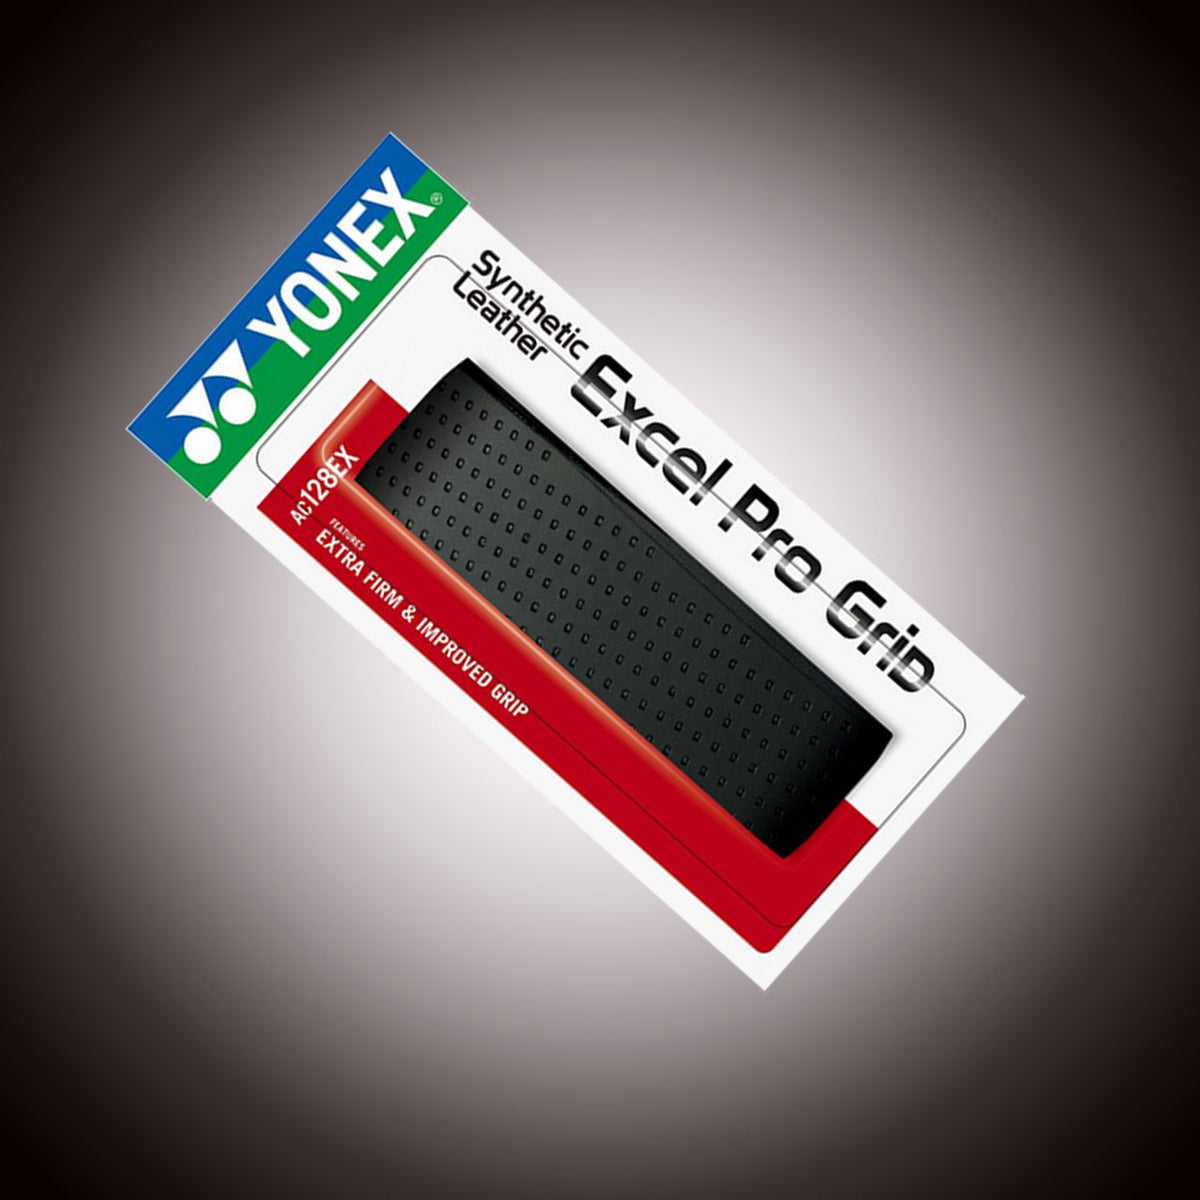 Yonex Excel Pro Leather Grip AC128EX